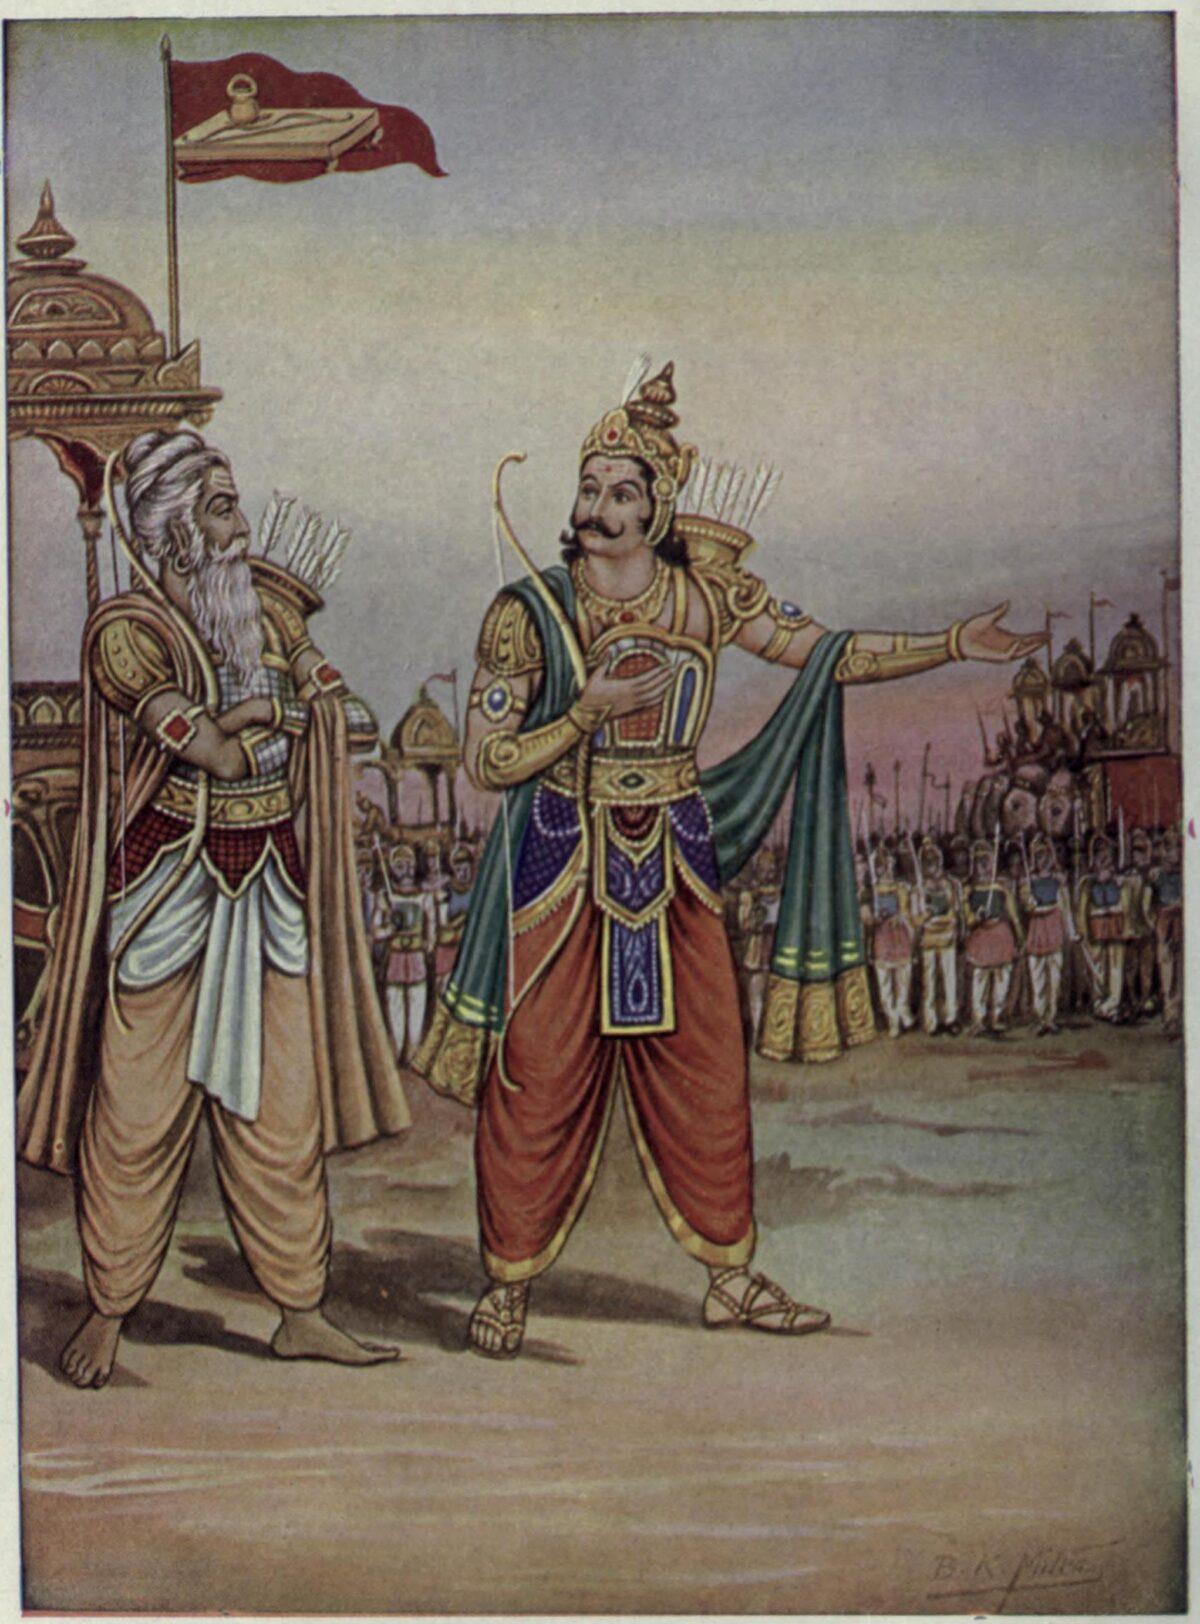 Duryodhana showing off his army. Gorakhpur Geeta Press. University of Toronto Collection. (Public Domain)